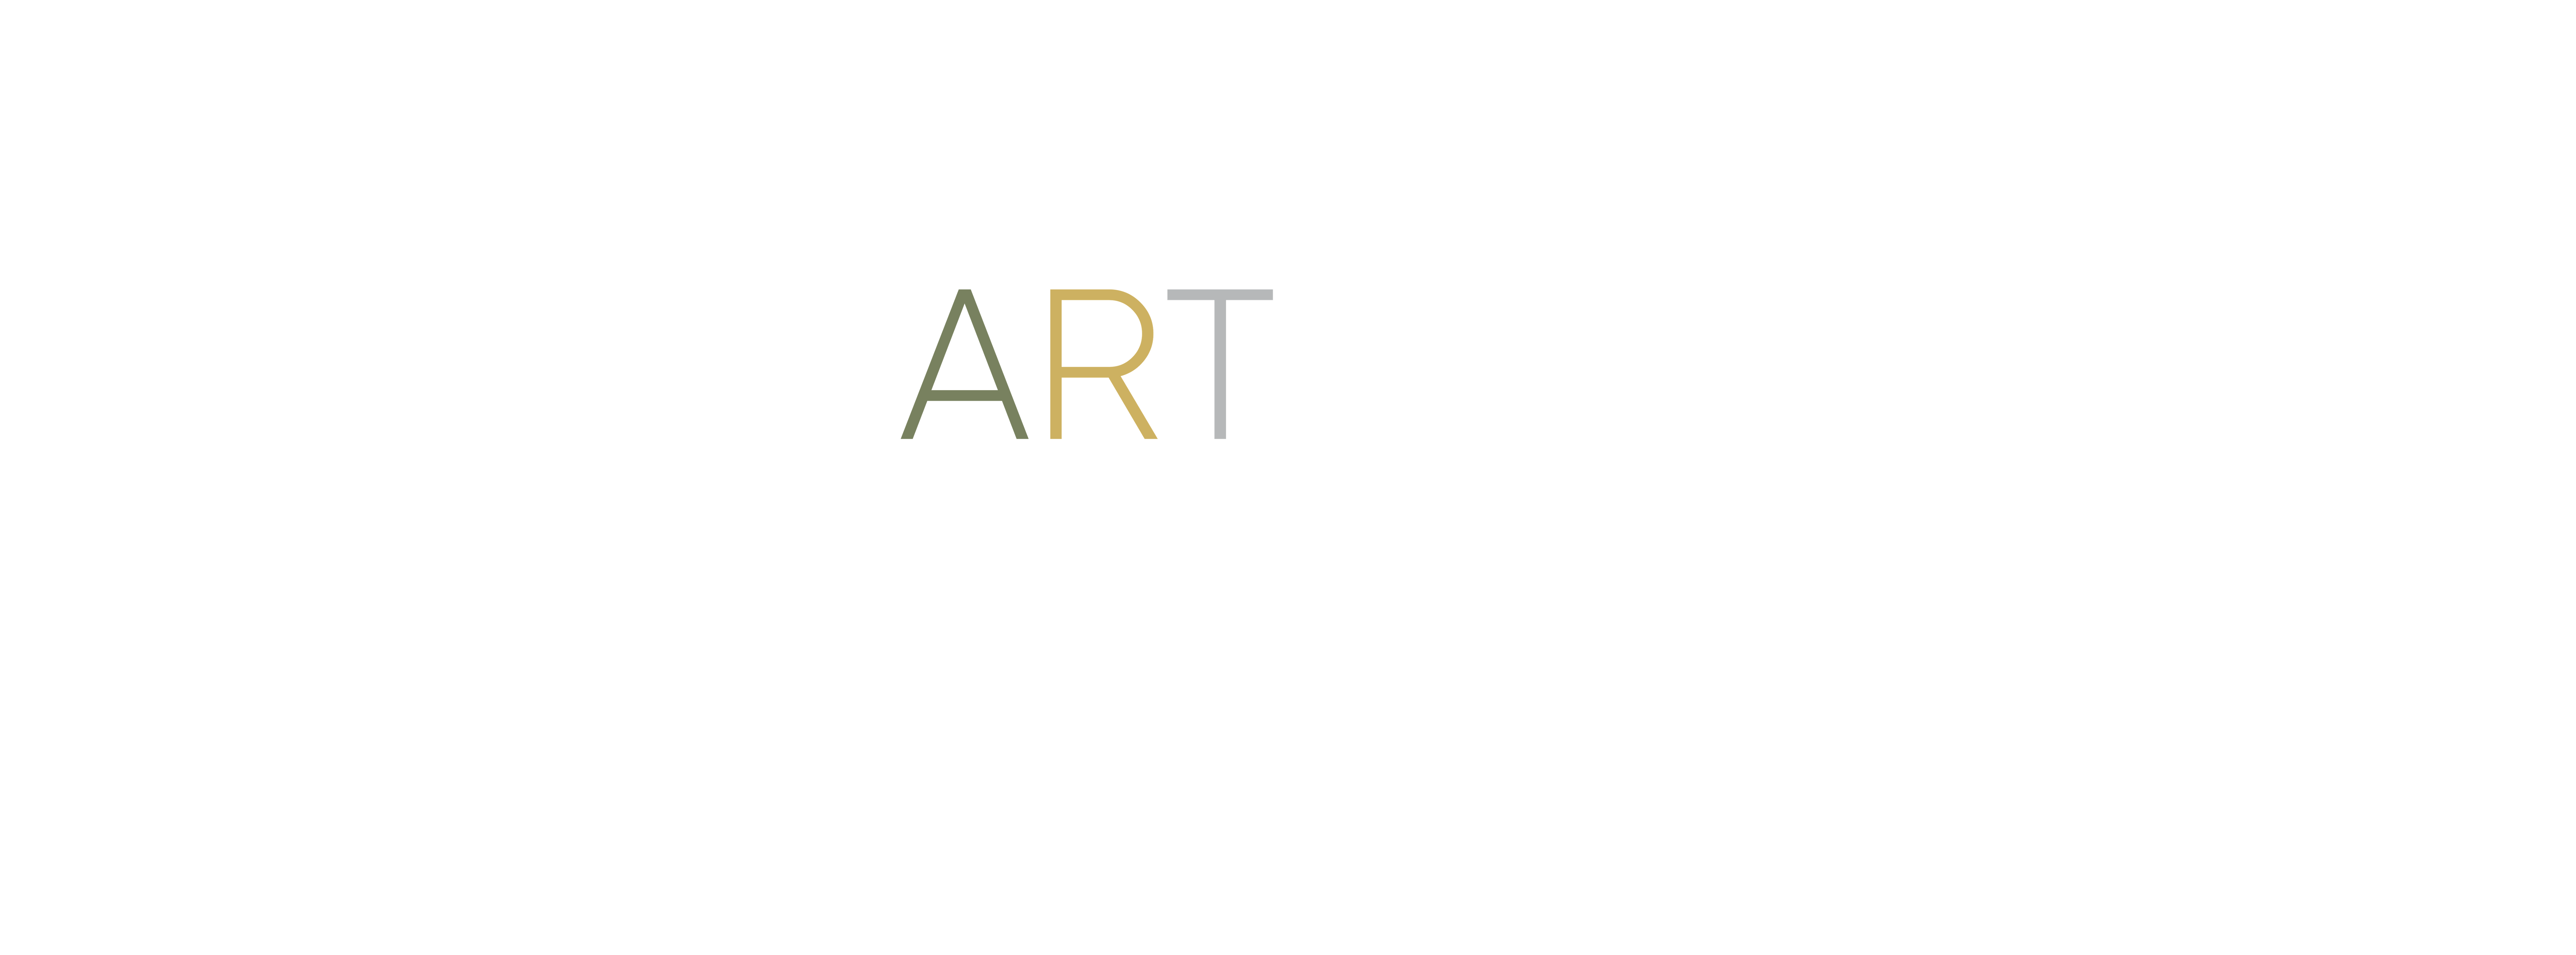 ARTHAB-LOGO-01.png